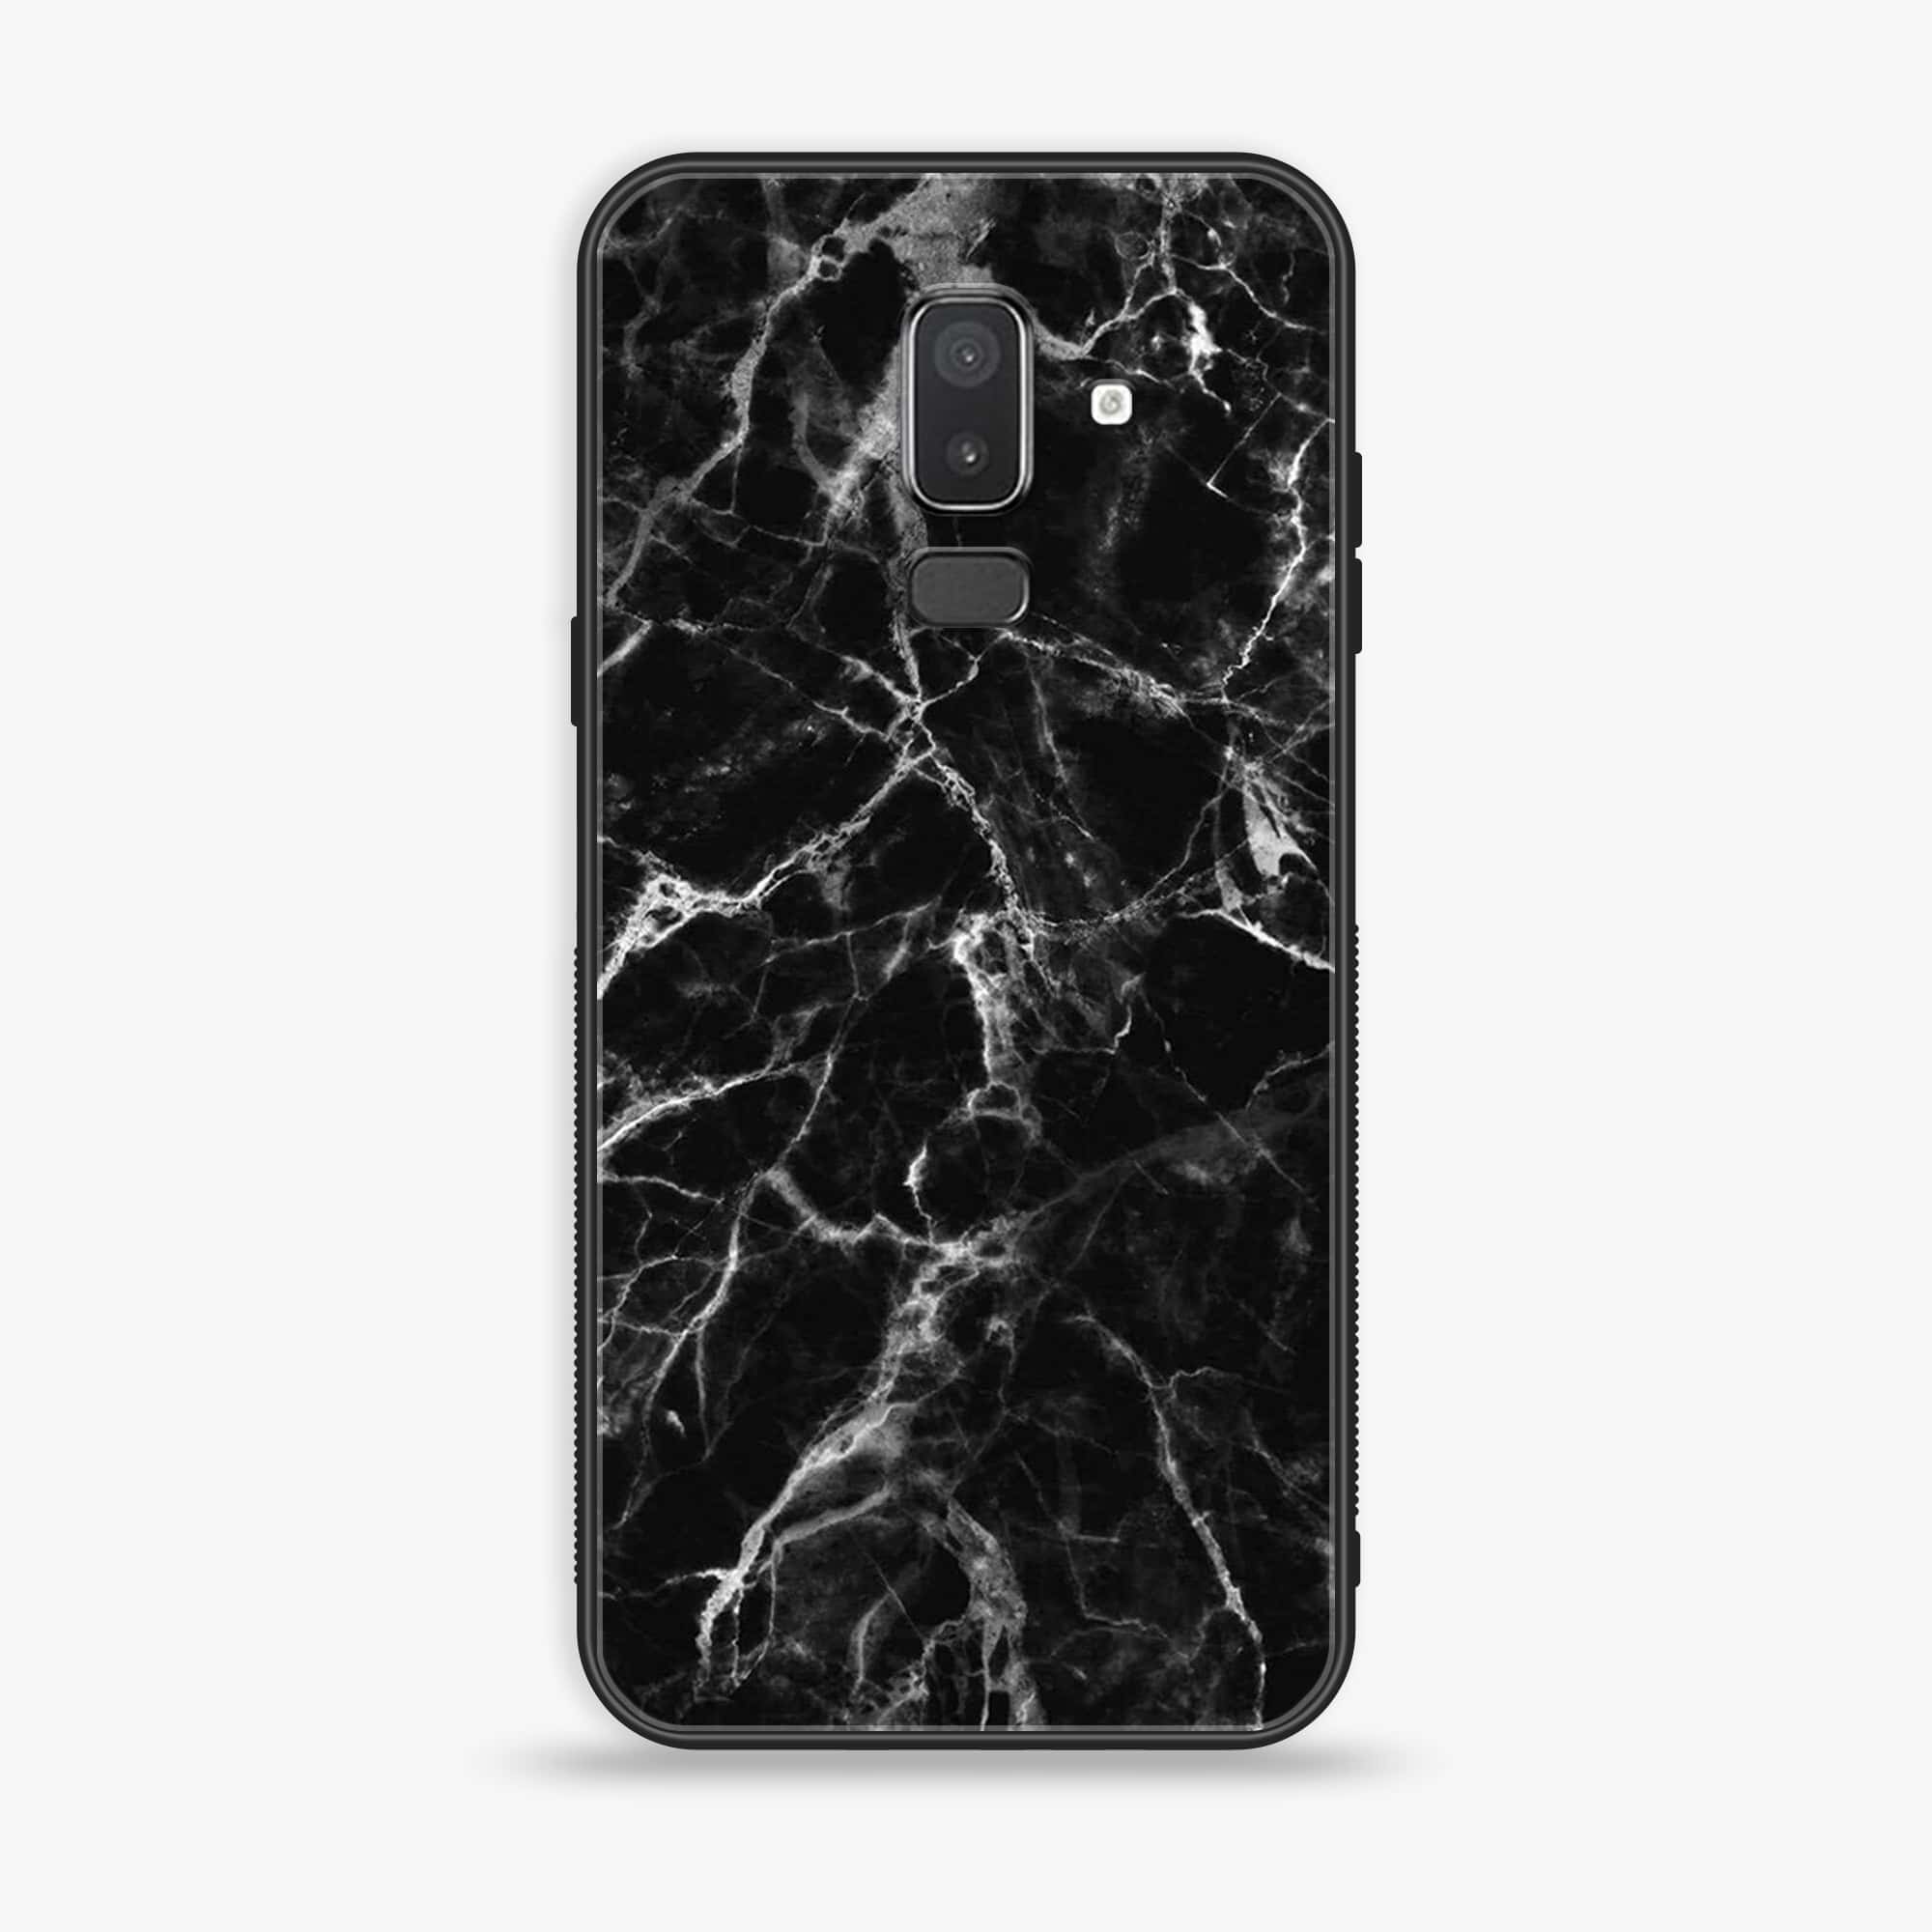 Samsung Galaxy J8 2018 - Black Marble Series - Premium Printed Glass soft Bumper shock Proof Case